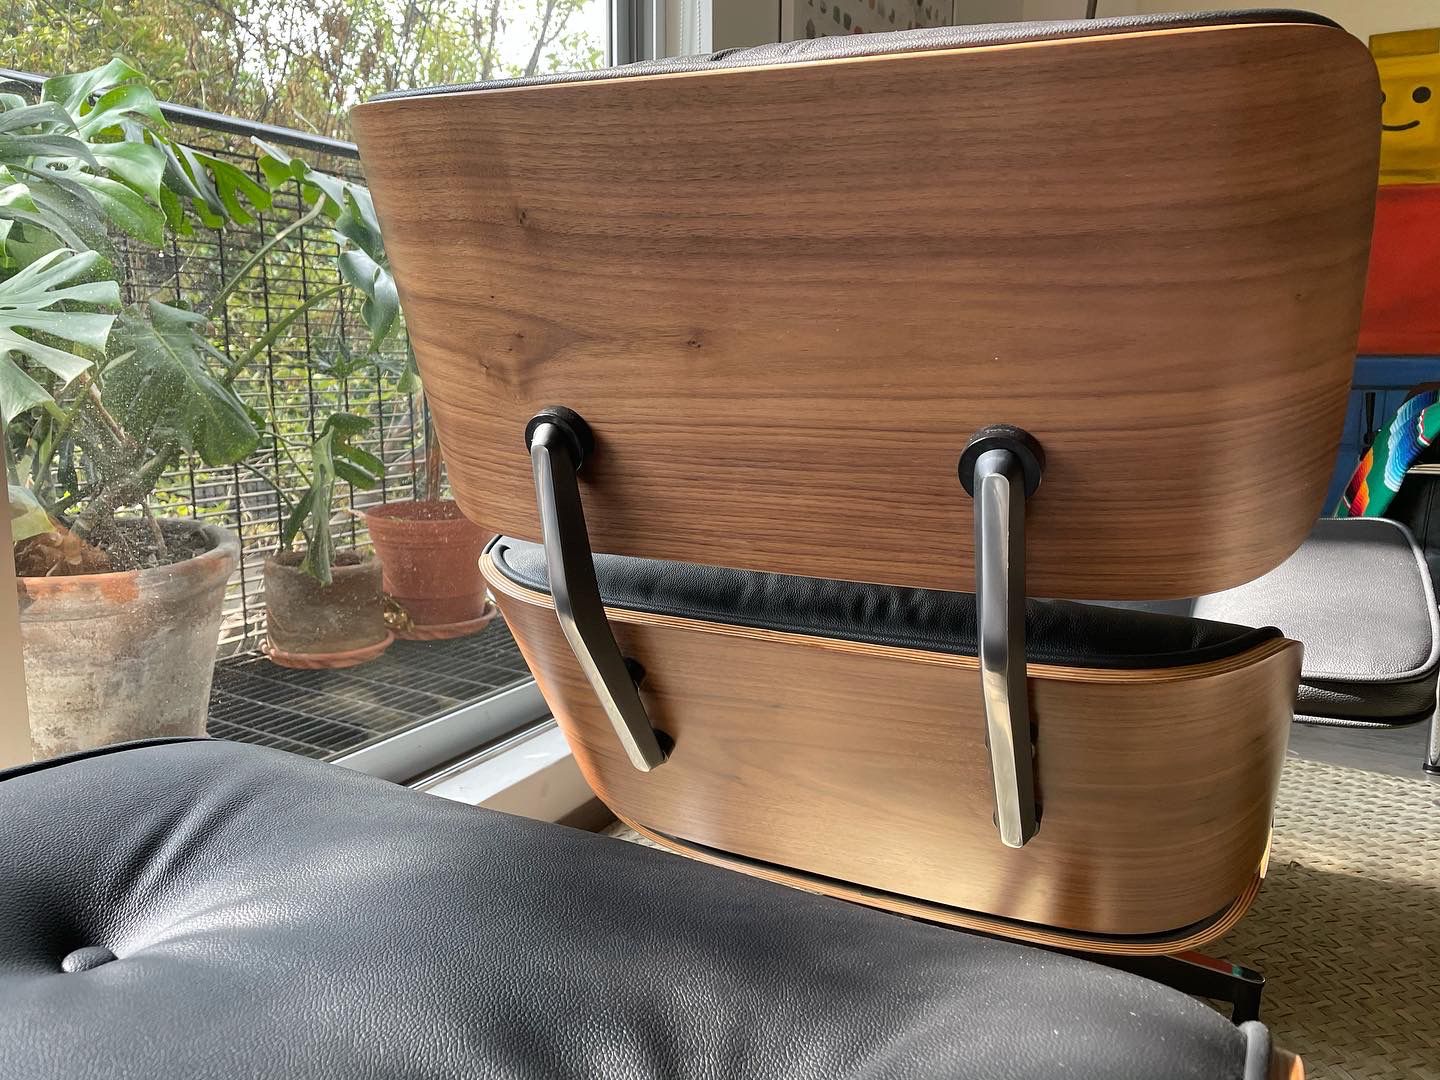 Eames Lounge Chair & Ottoman - réplica